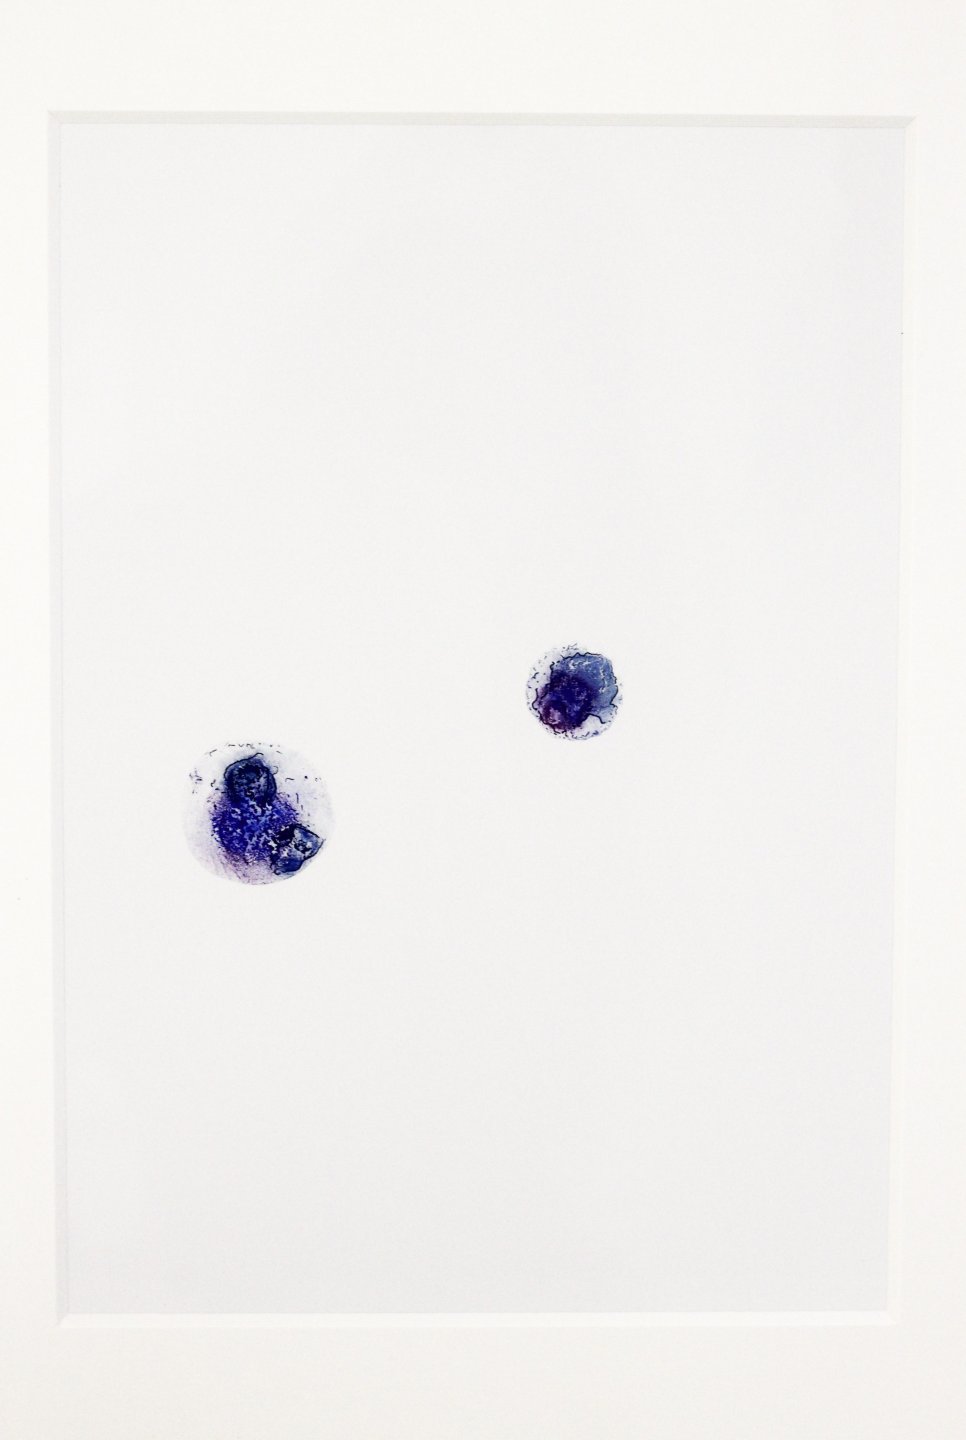 Galerie Benjamin Eck München LUKAS MLETZKO 'A.O.T.', watercolour on inkjet–photo paper, 29,7cm x 21cm, 2017